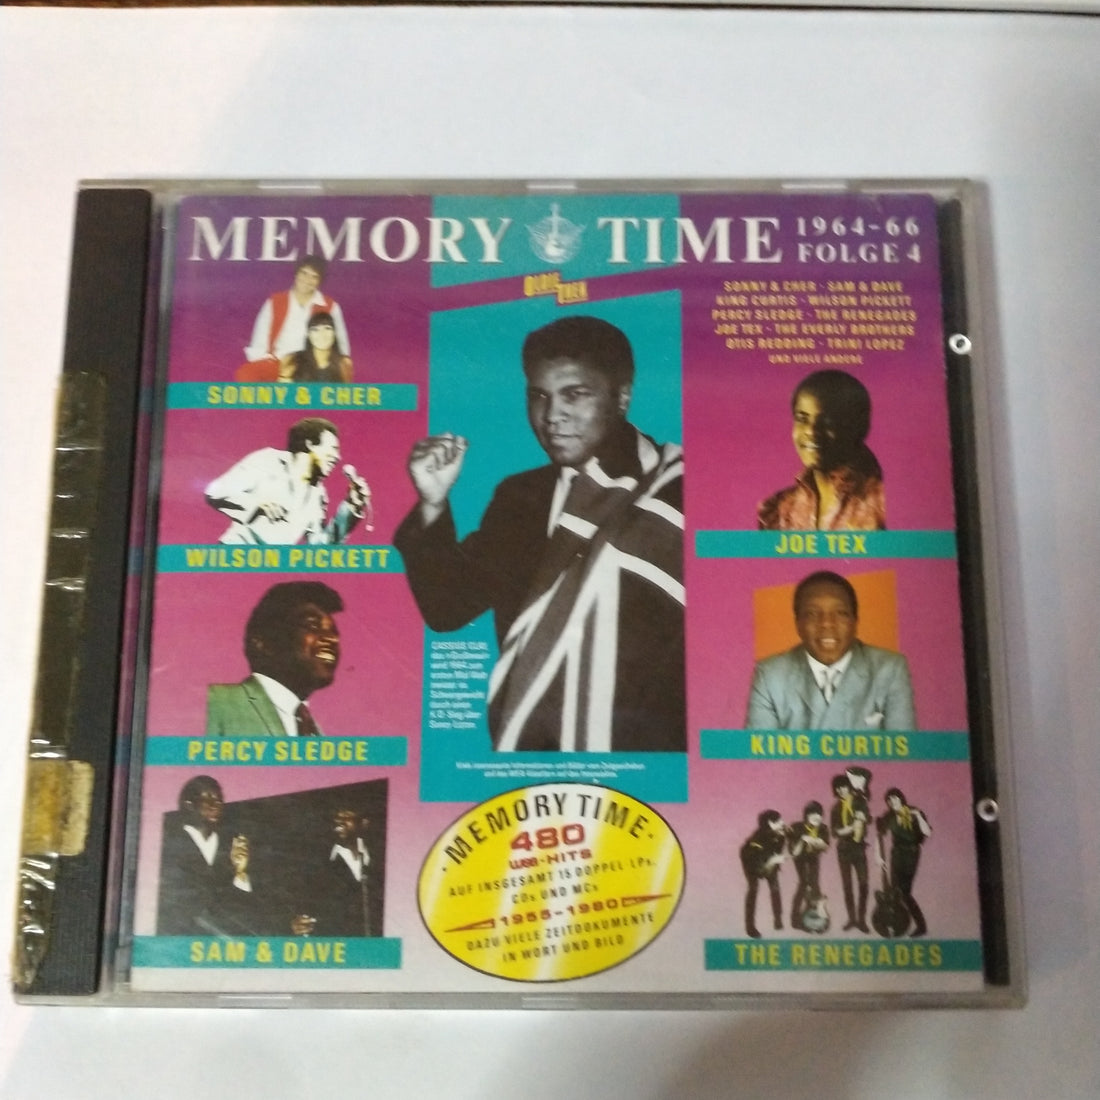 Various - Memory Time Folge 4 • 1964 - 66 (CD) (G+)